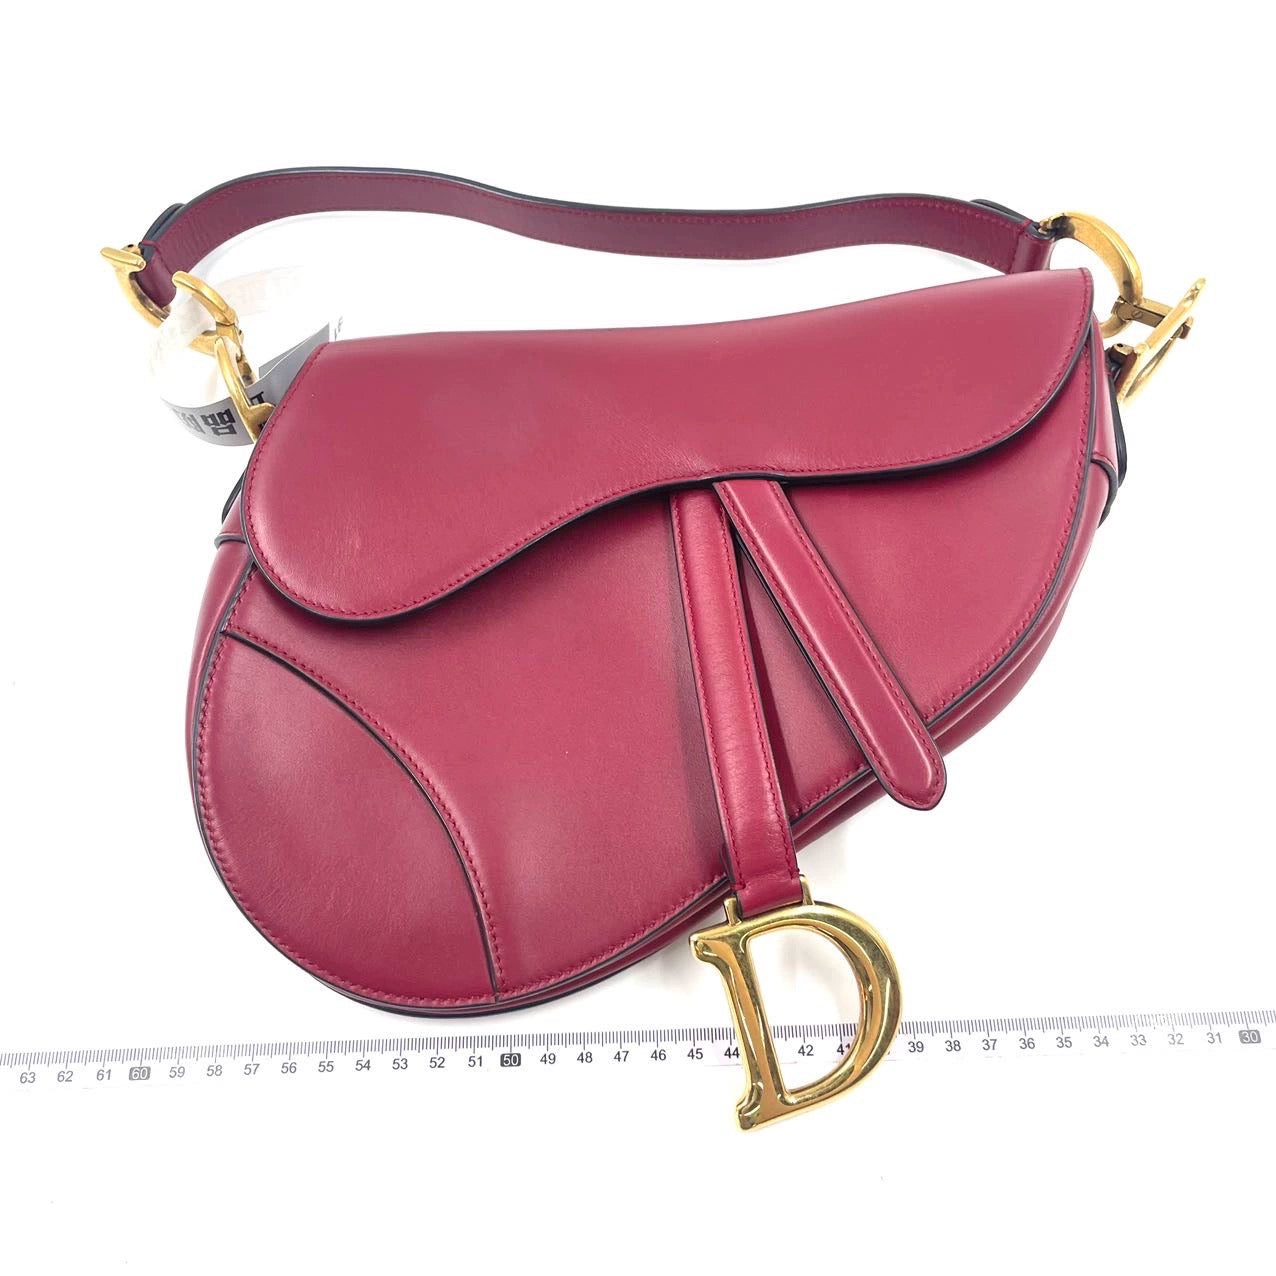 Sold Dior Saddle Scarlet Red Burgundy Medium Calfskin Smooth Leather Handbag like new